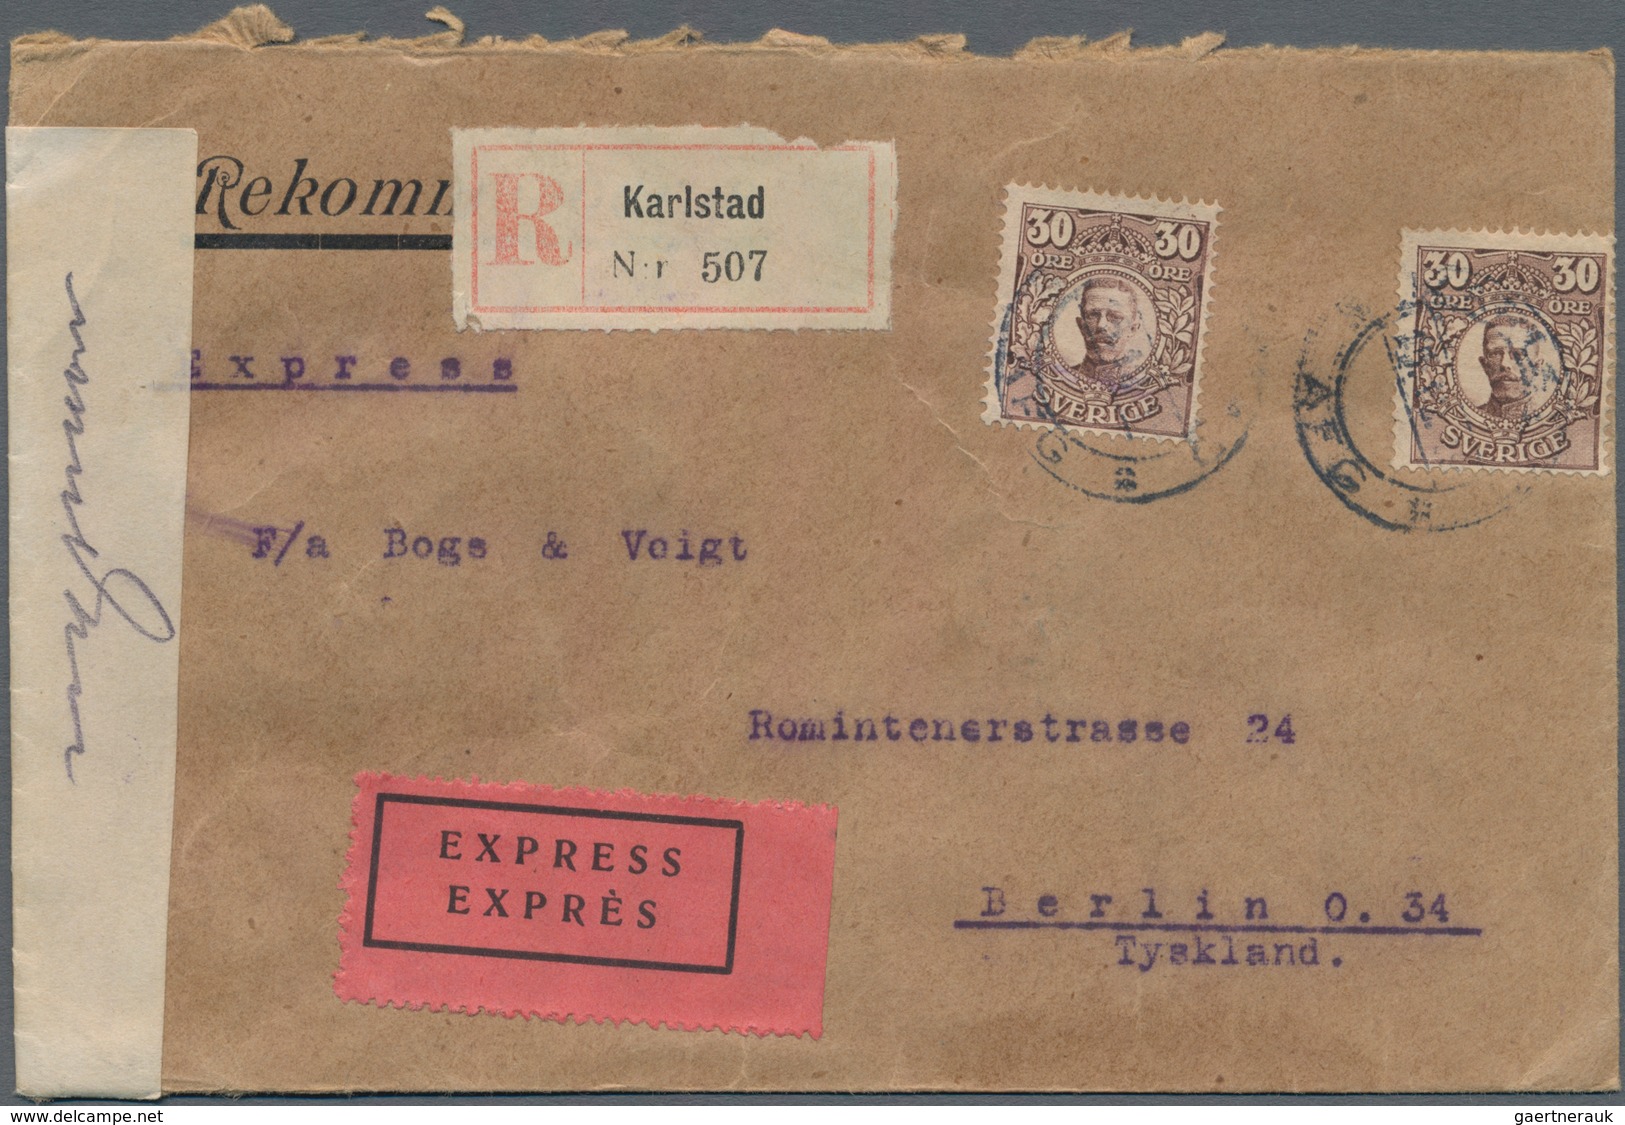 Europa: 1895/1950 (ca.), Turkey, Greece, Sweden, England Ec. Covers (ca. 37, Inc. Some Uprated Stati - Otros - Europa